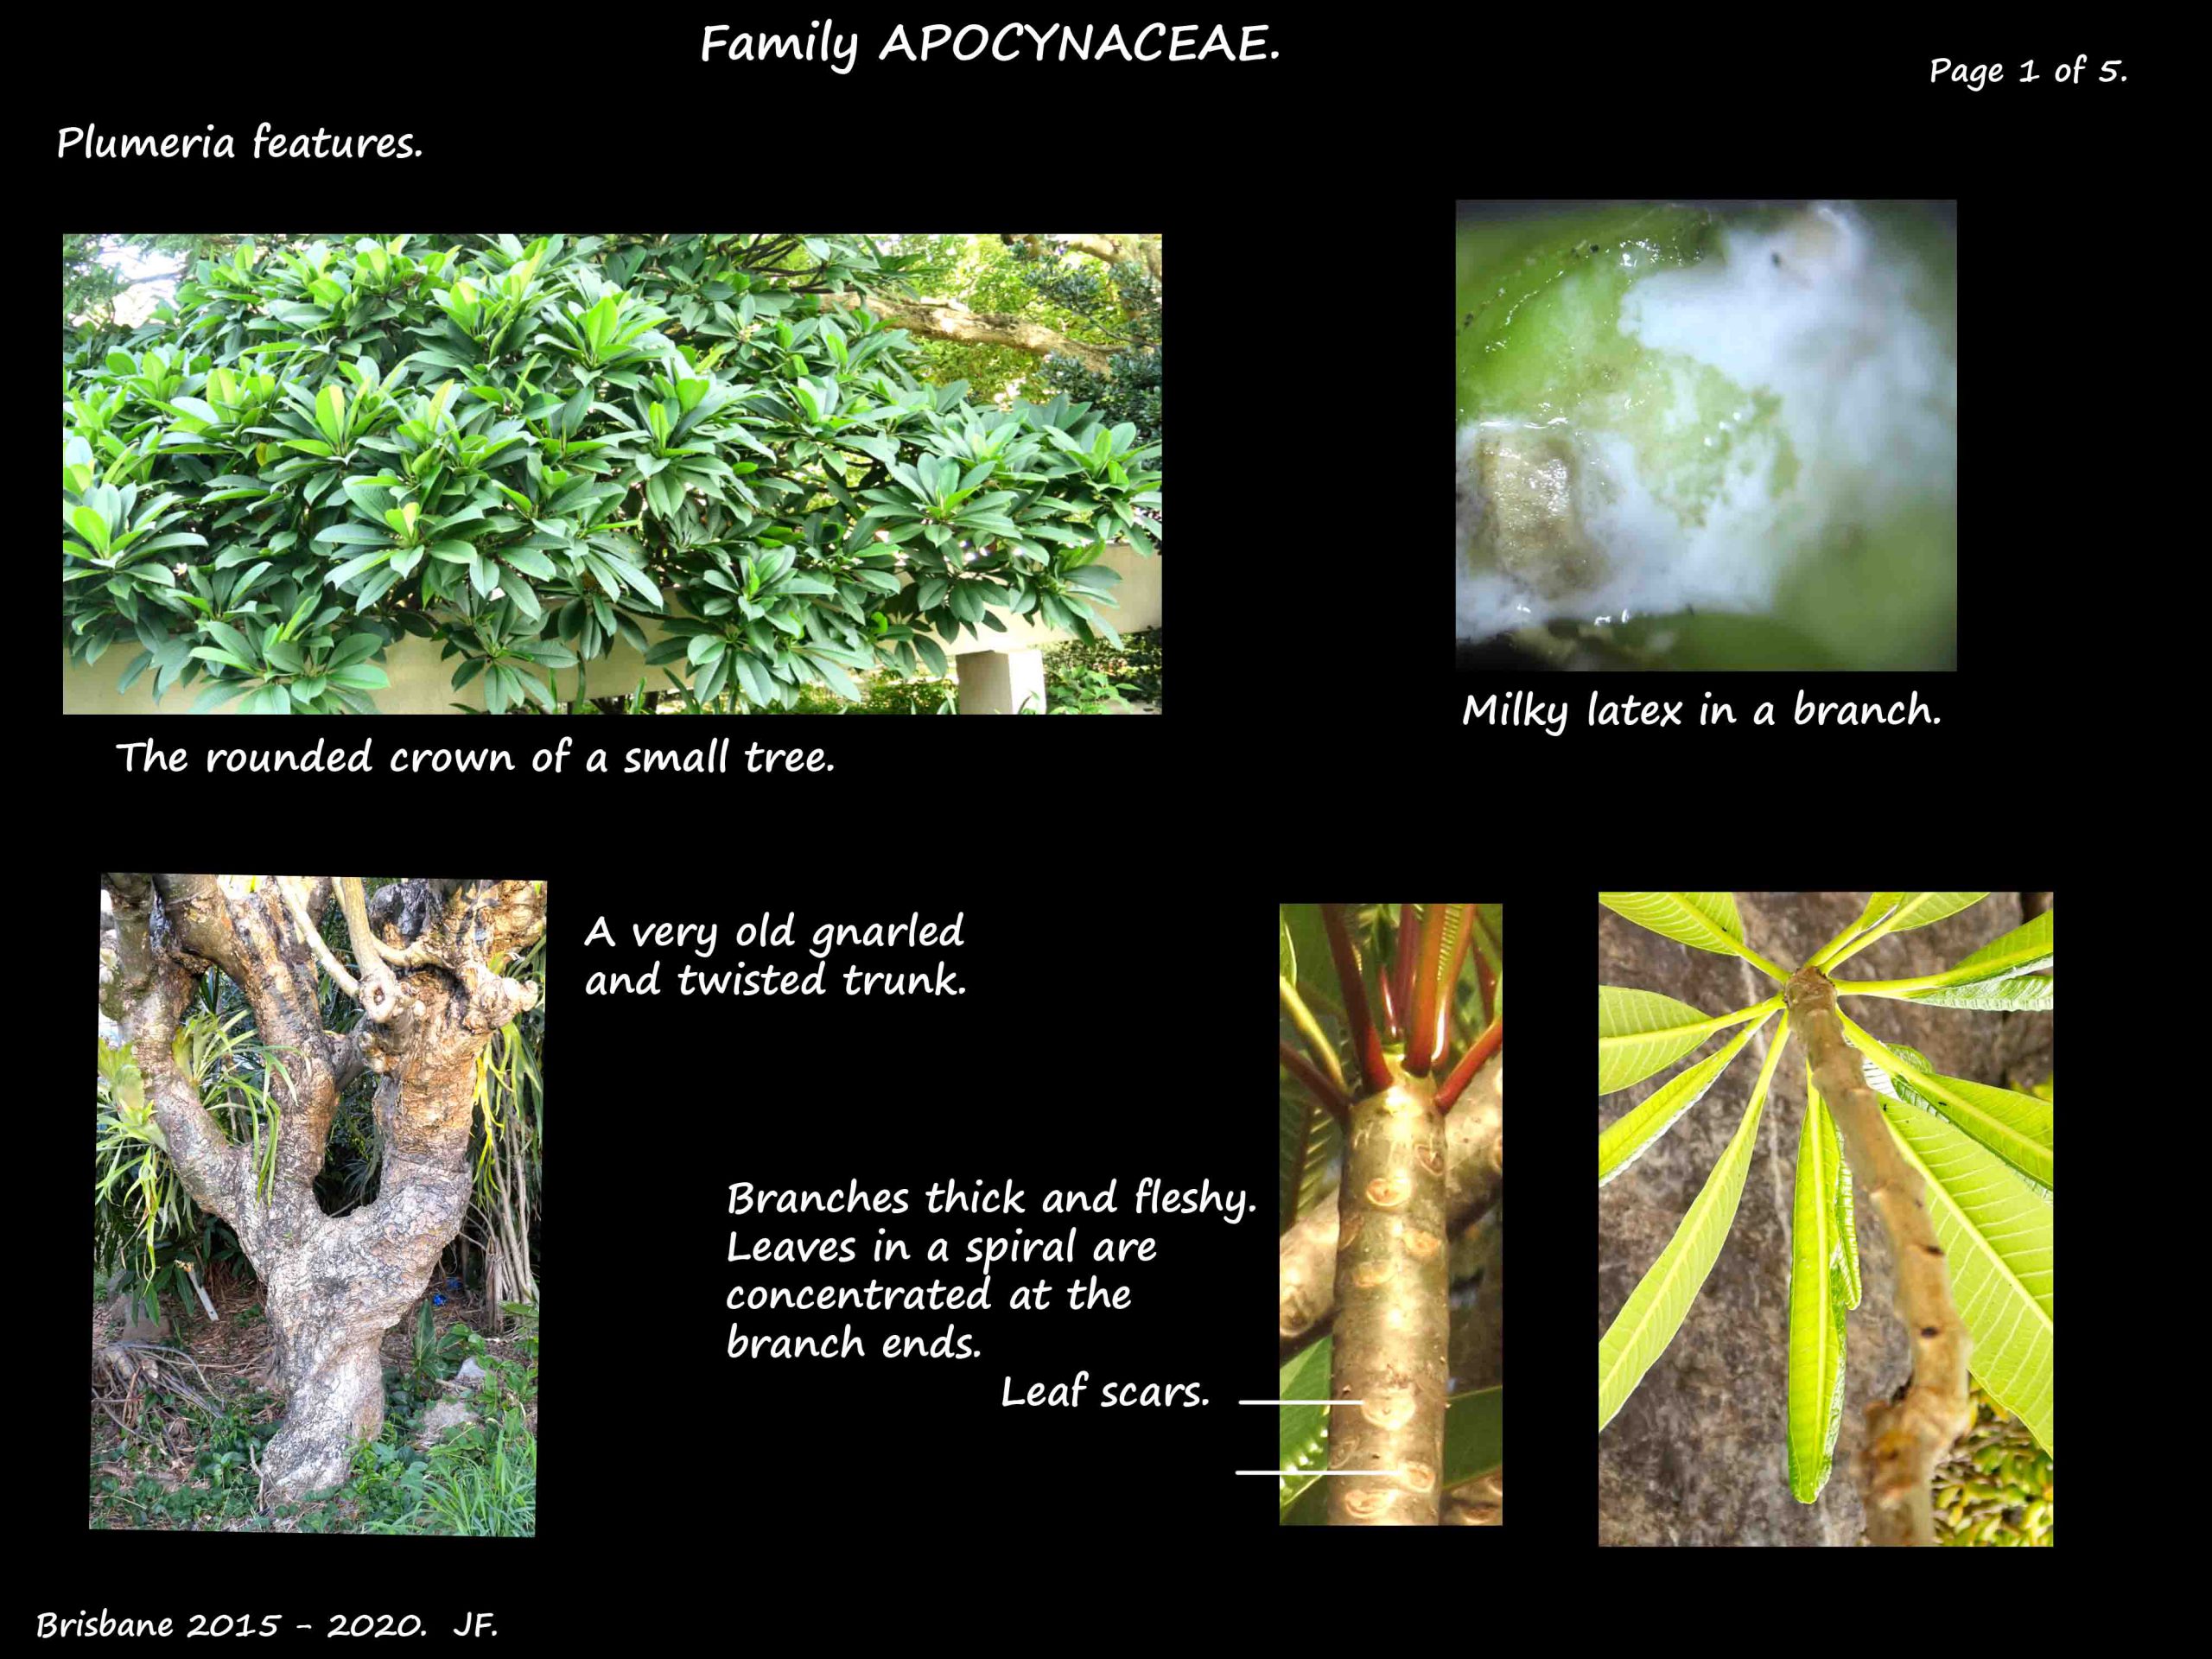 1 Frangipani plants, stems and latex